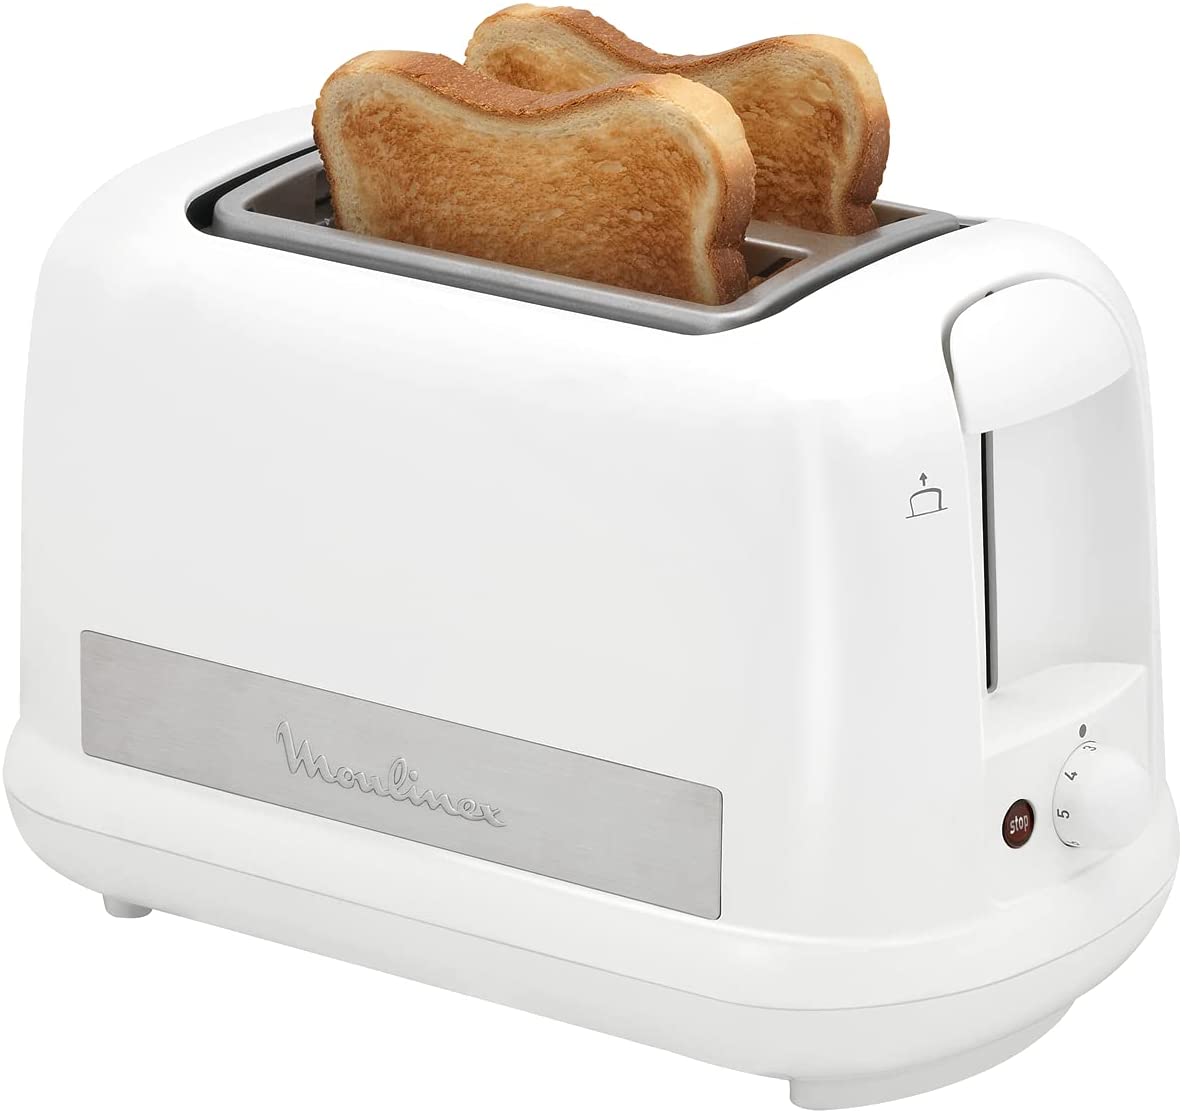 Moulinex Toaster LT162111 Plus, White, Model: Principio 30,20 x 17.2 x 19.60 cm